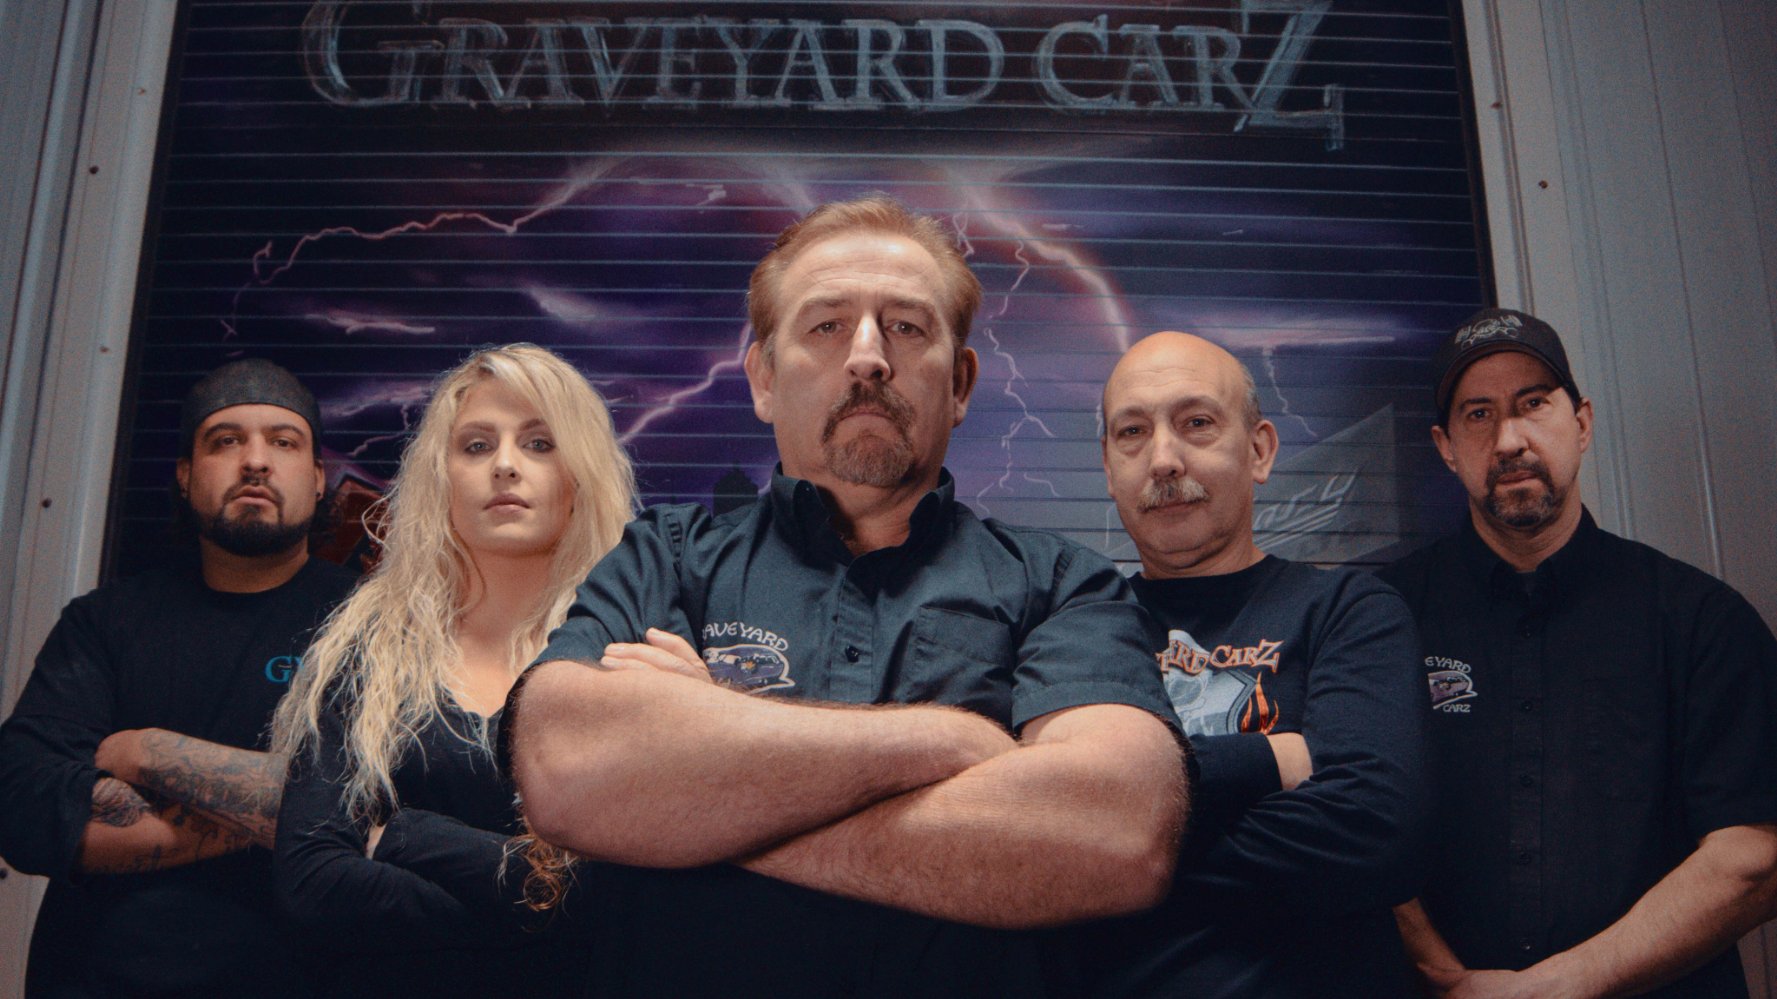 Watch Graveyard Carz - Season 6